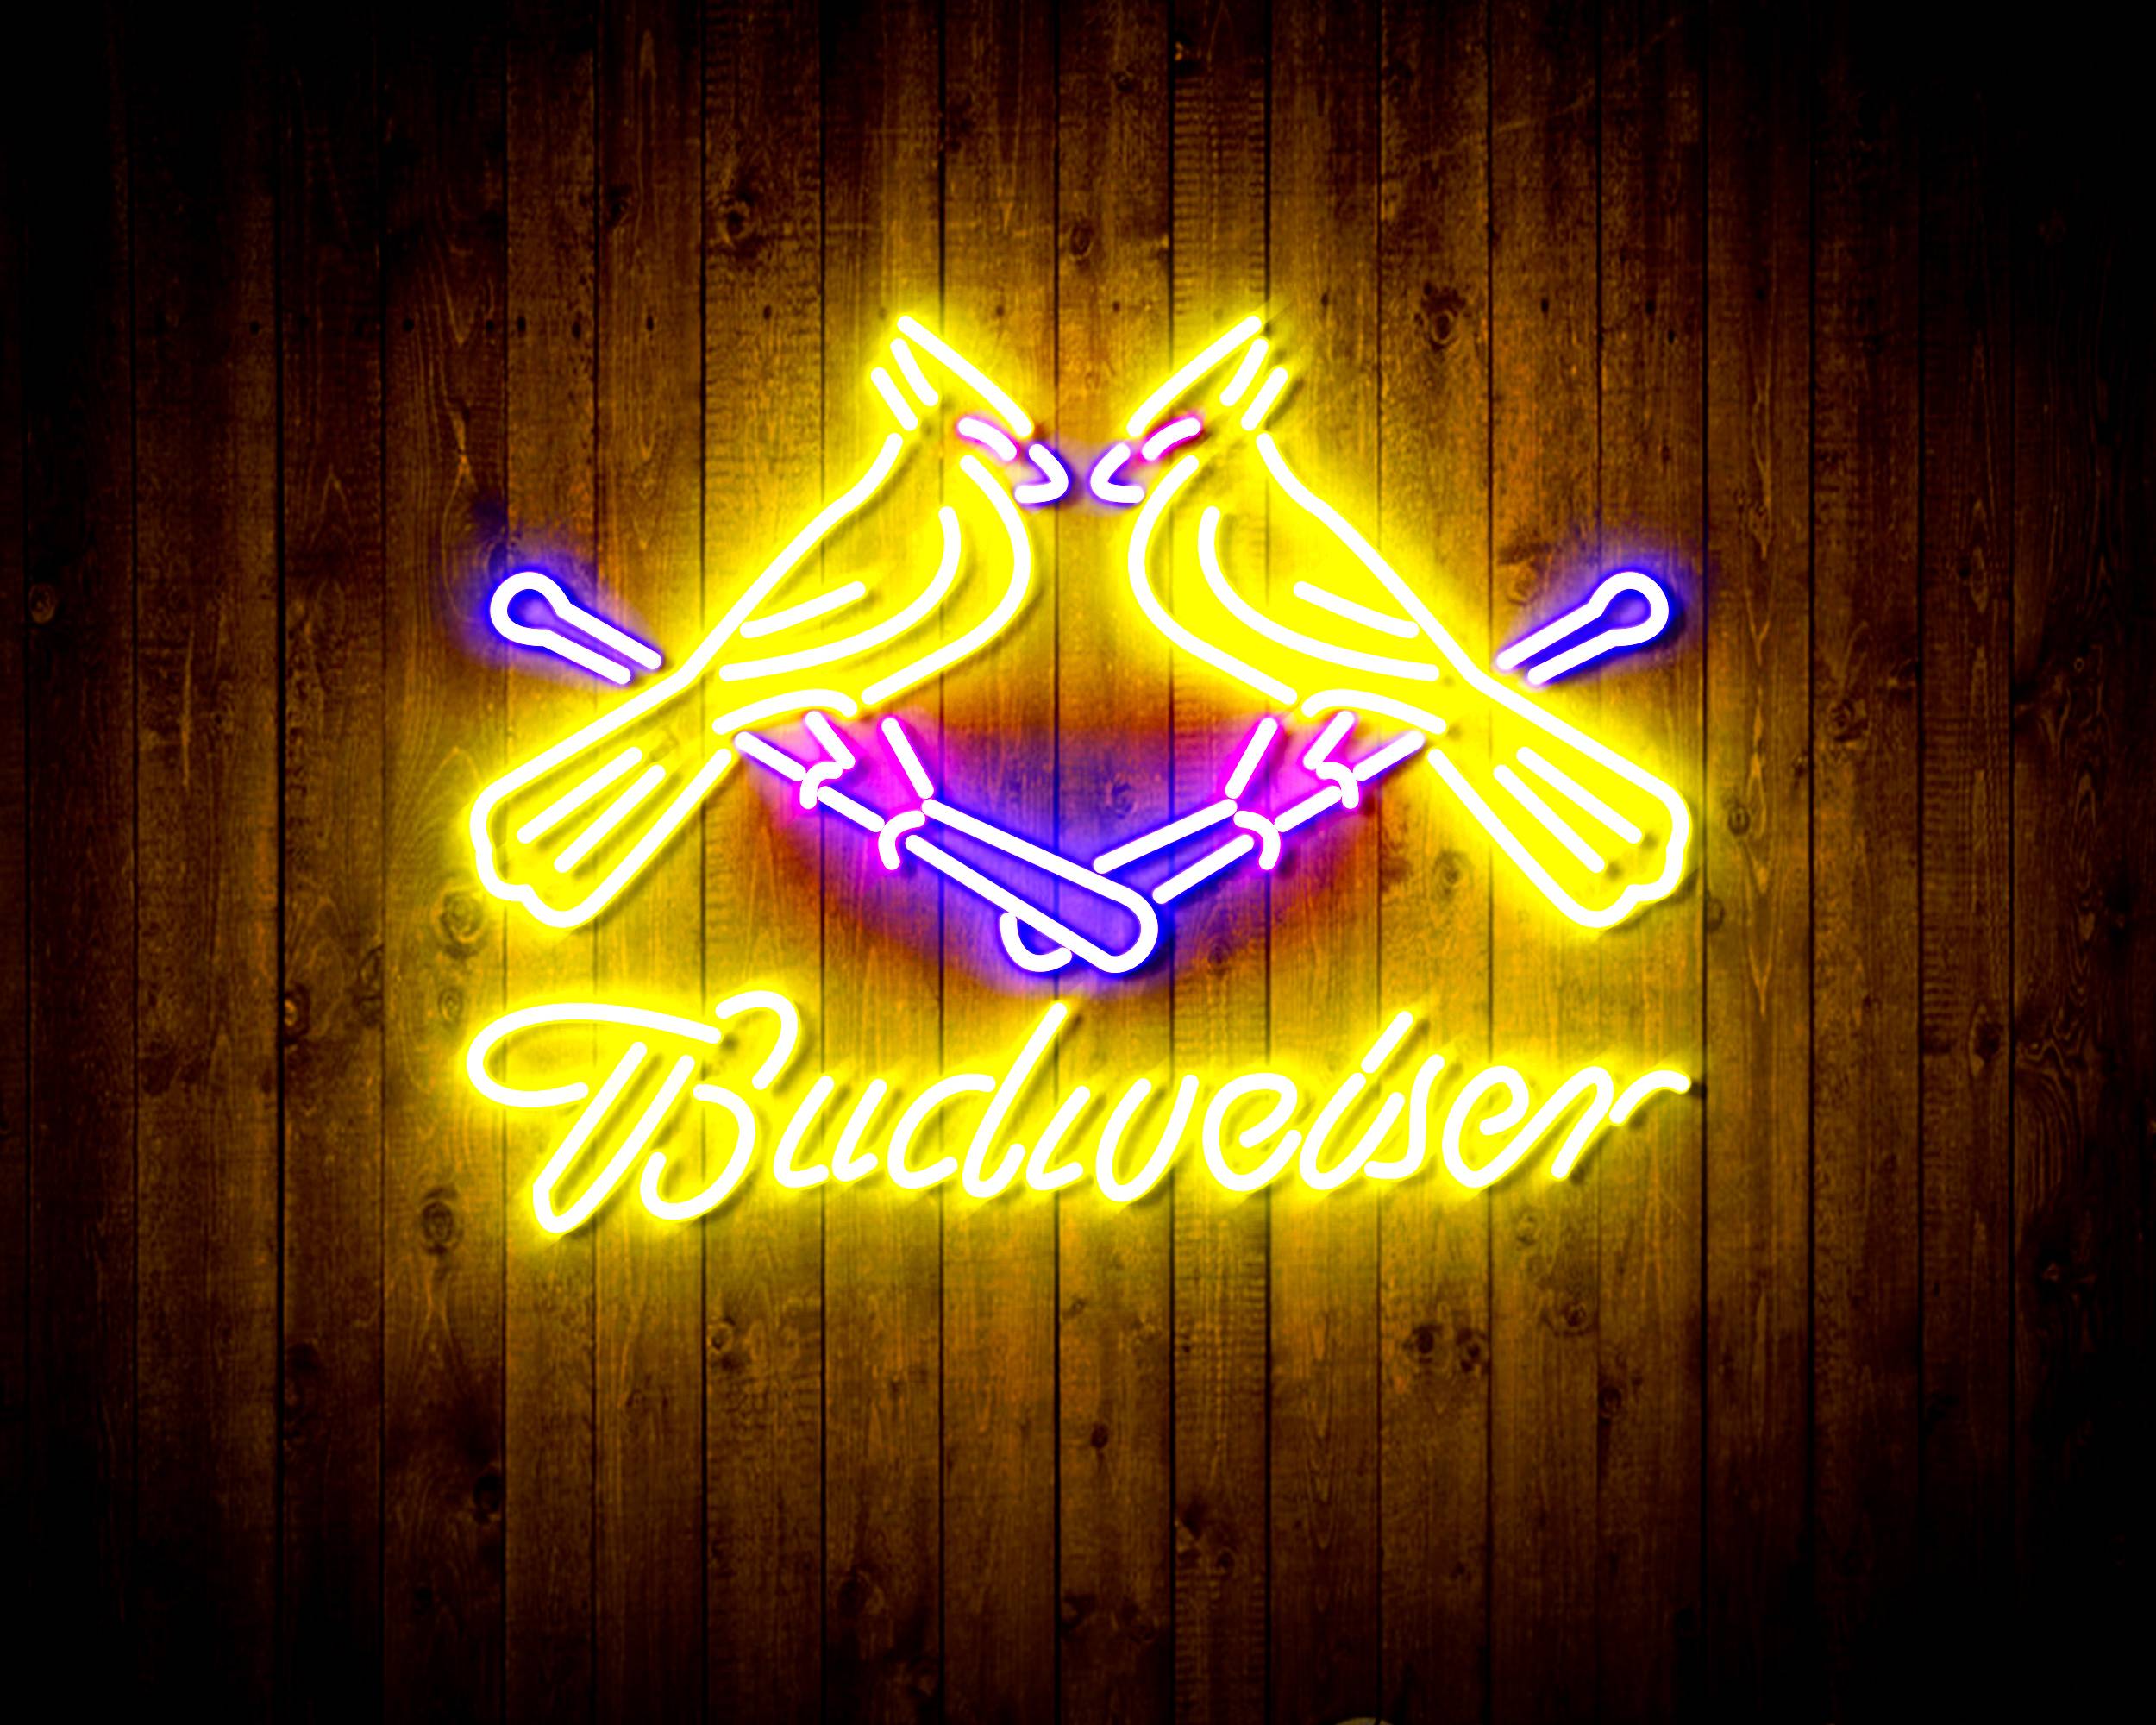 Budweiser with Cadinals Handmade LED Neon Light Sign